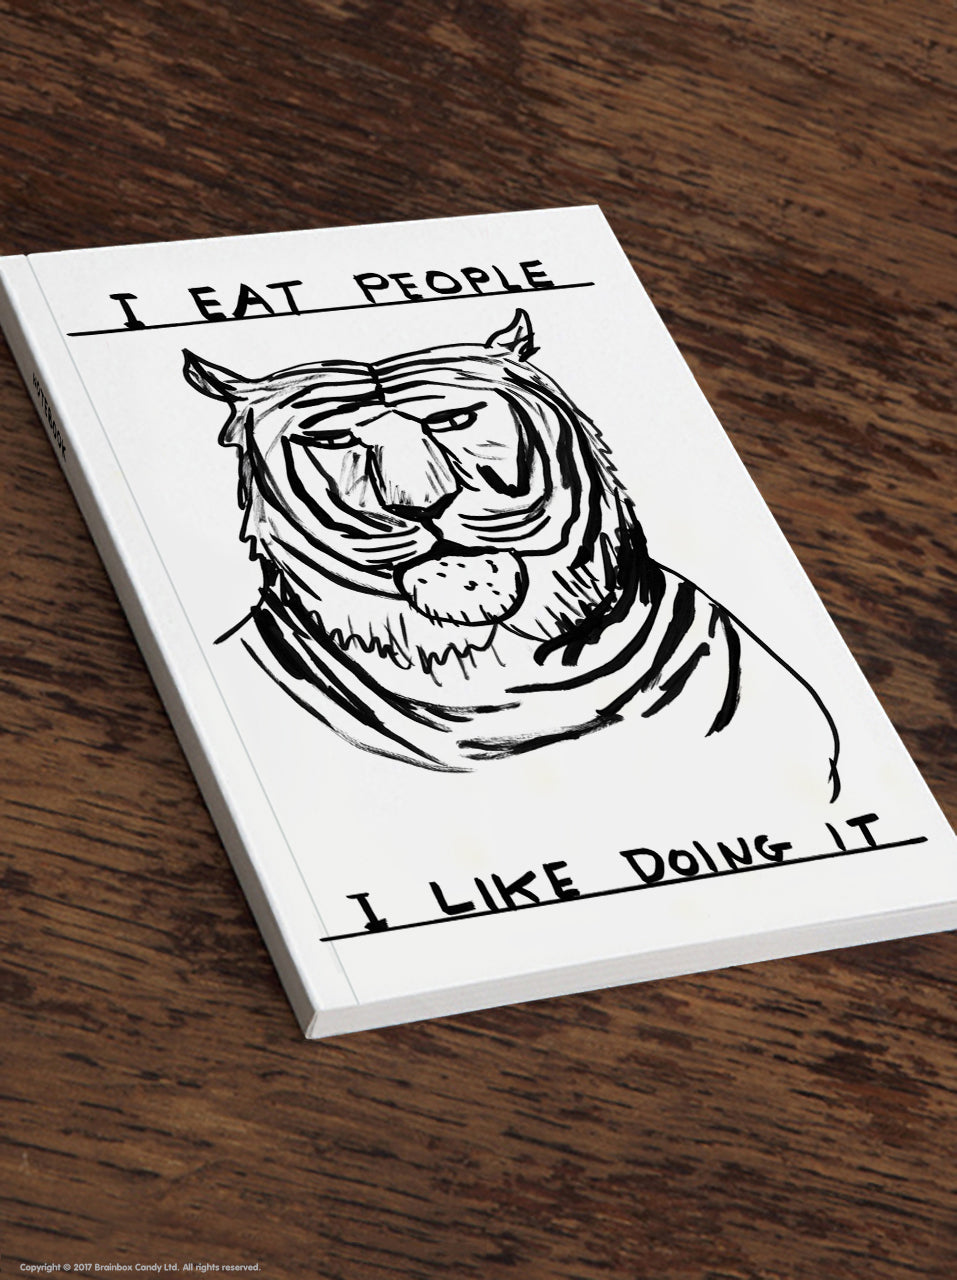 I eat people I like doing it A5 Notebook by David Shrigley